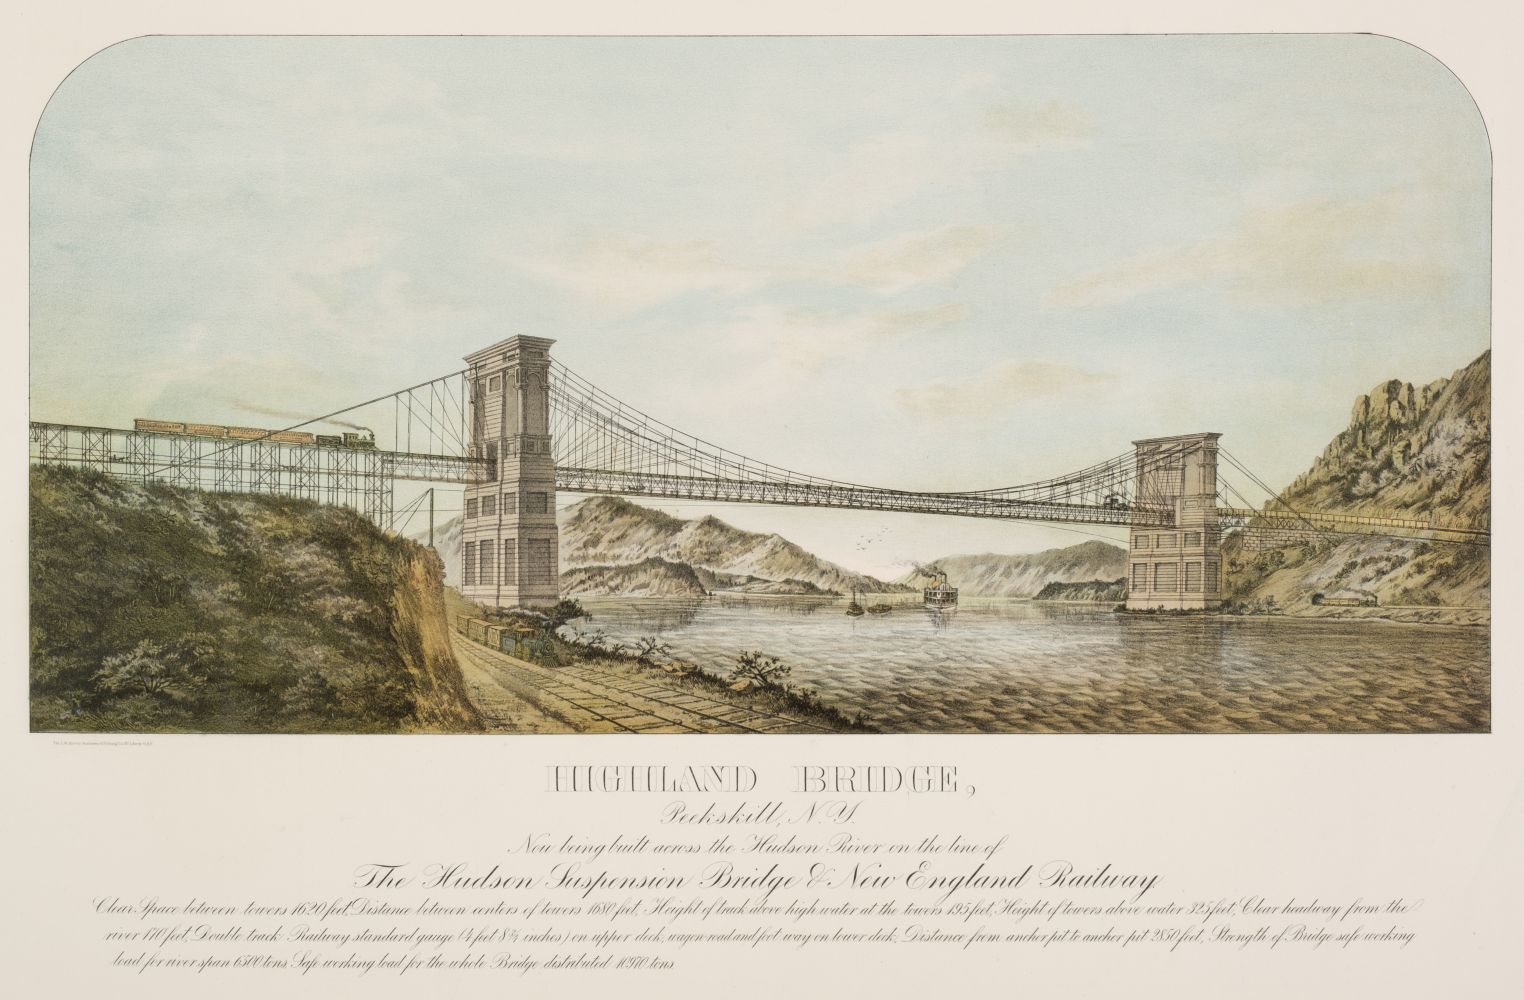 * Ahrens (L.W., printers). Highland Bridge, Peekskill, N.Y., circa 1900